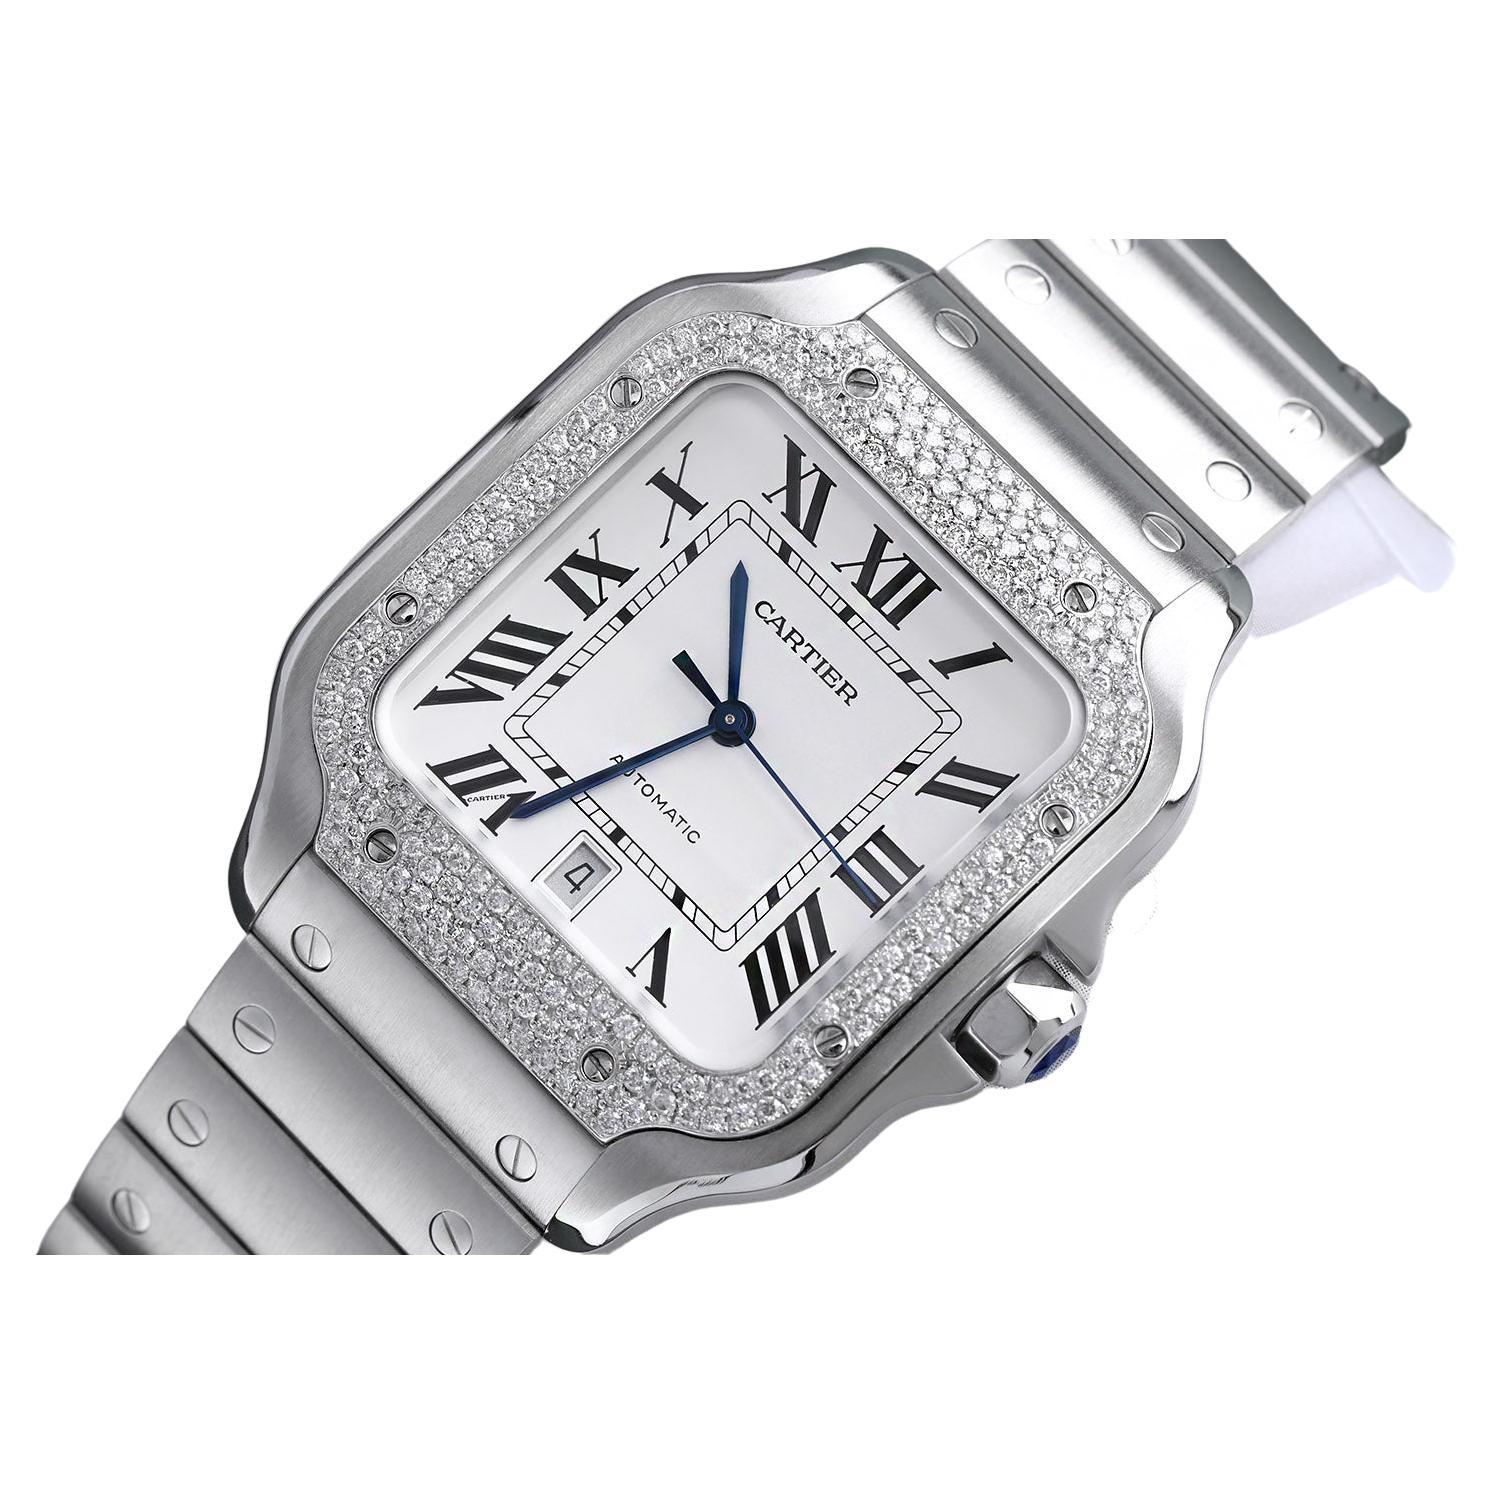 Cartier Santos De Cartier Stainless Steel Watch with Diamond Bezel White Dial